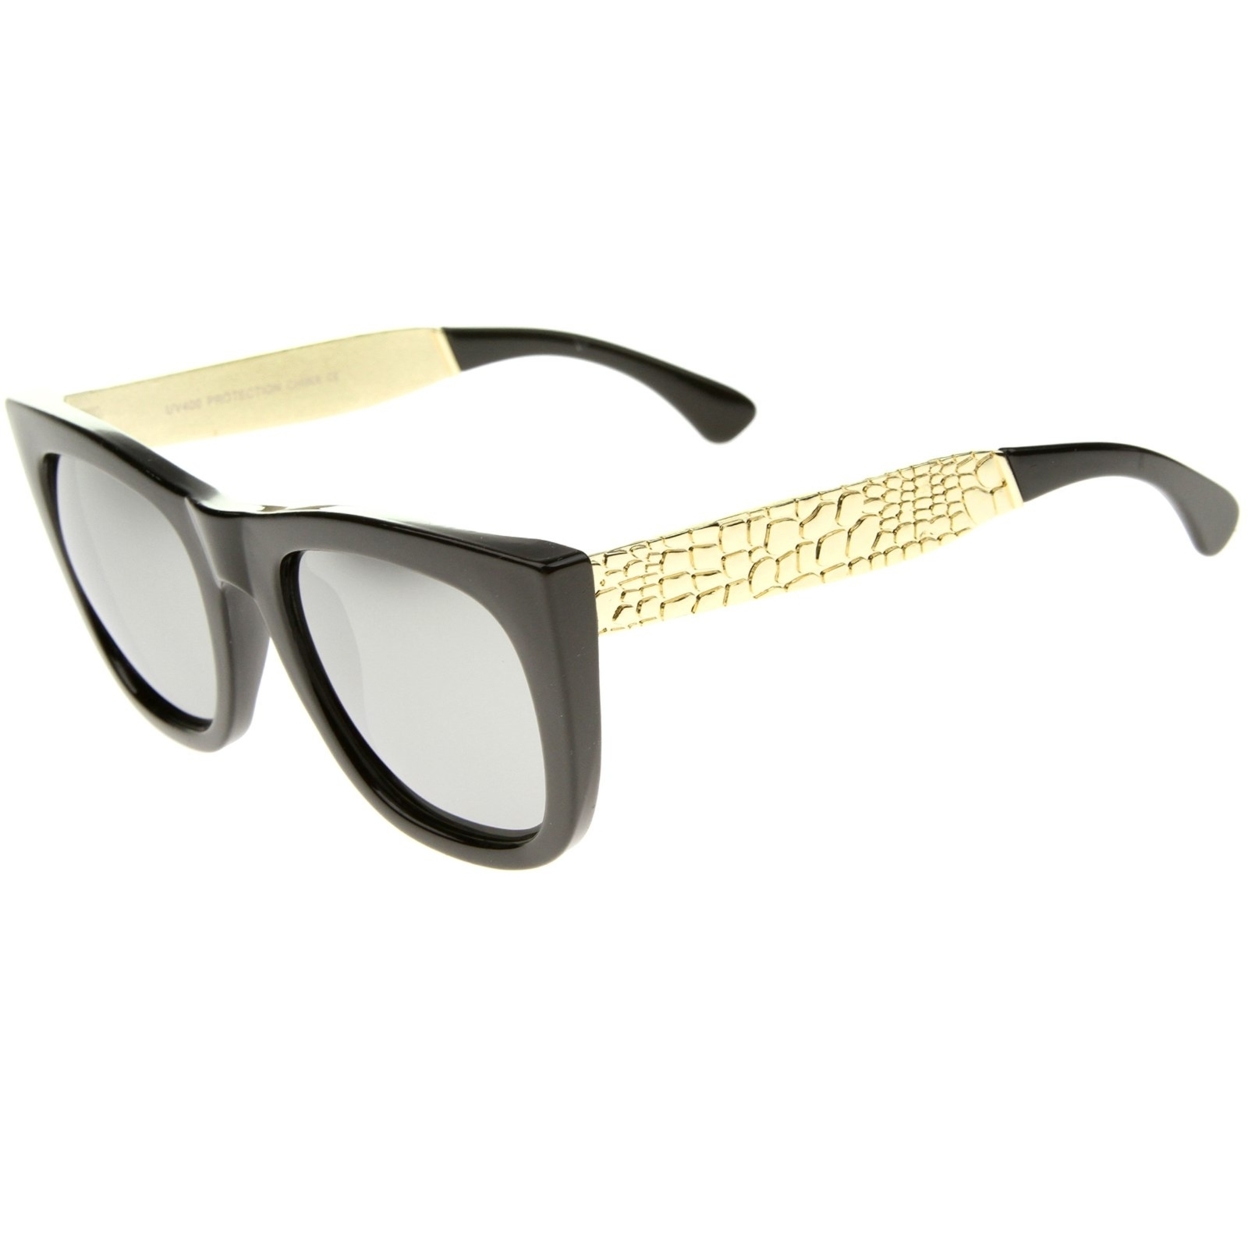 High Fashion Alligator Metal Temple Mirrored Lens Flat Top Sunglasses - Black-Gold / Blue Mirror